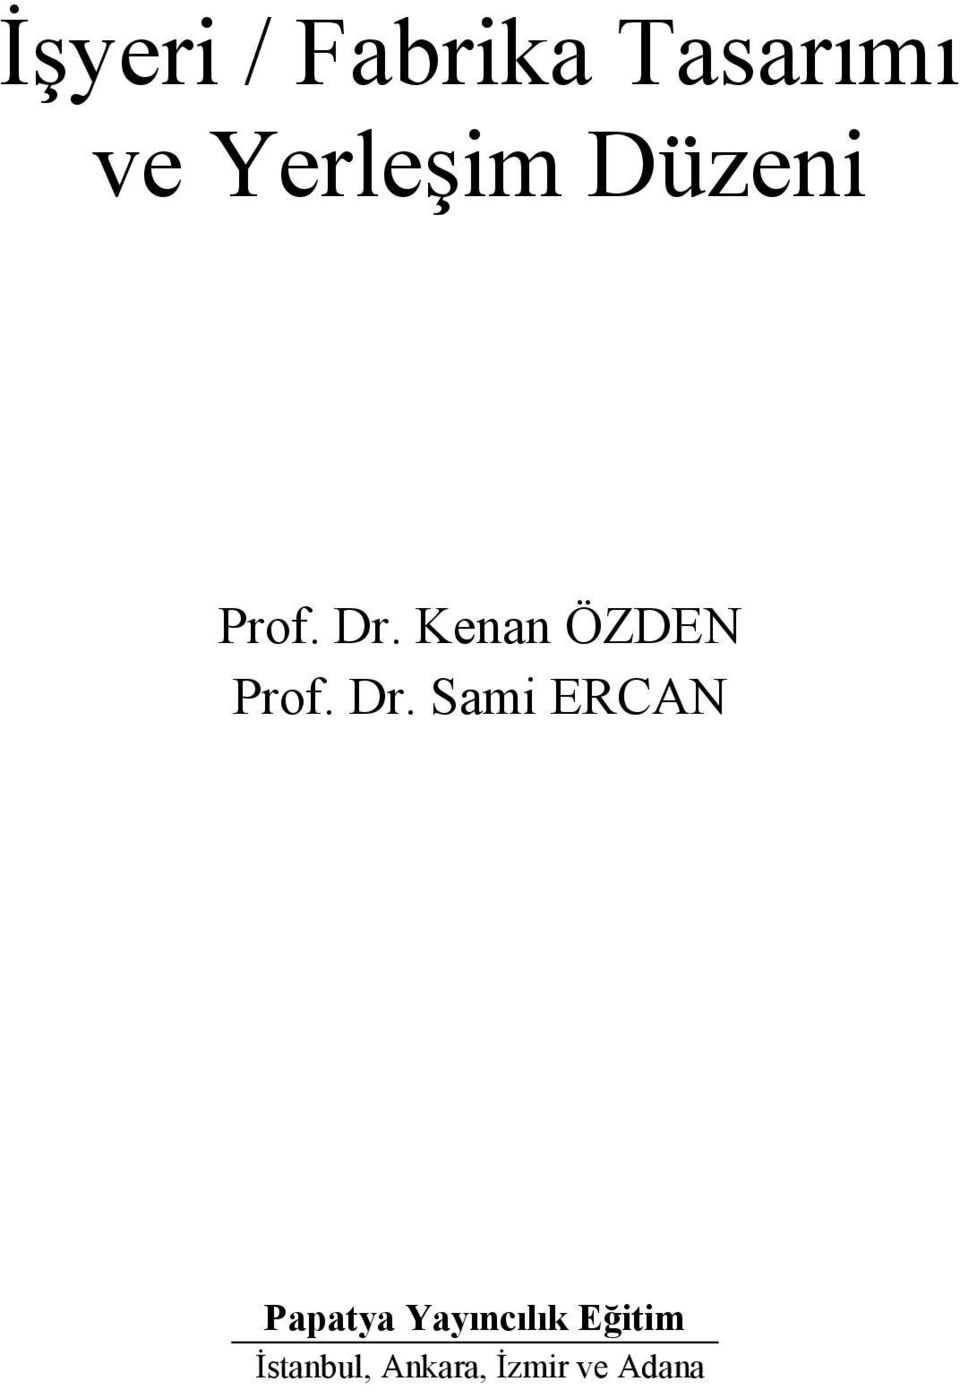 Kenan ÖZDEN Prof. Dr.